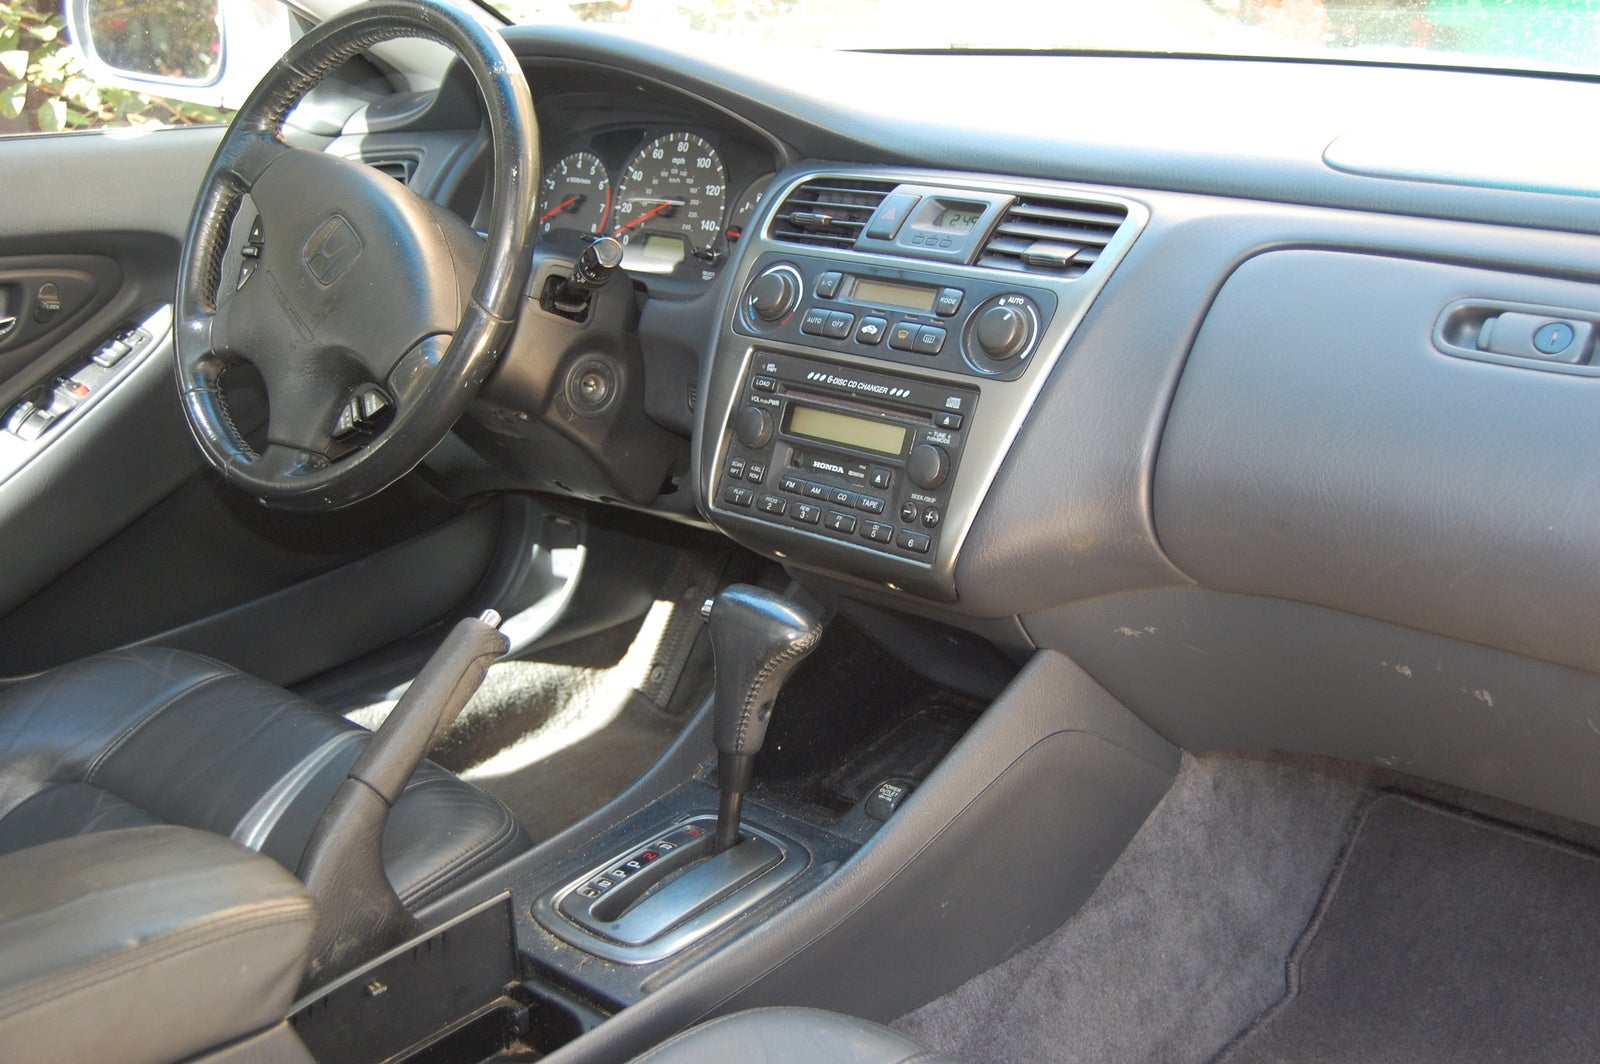 2001 Honda accord interior dimensions #2